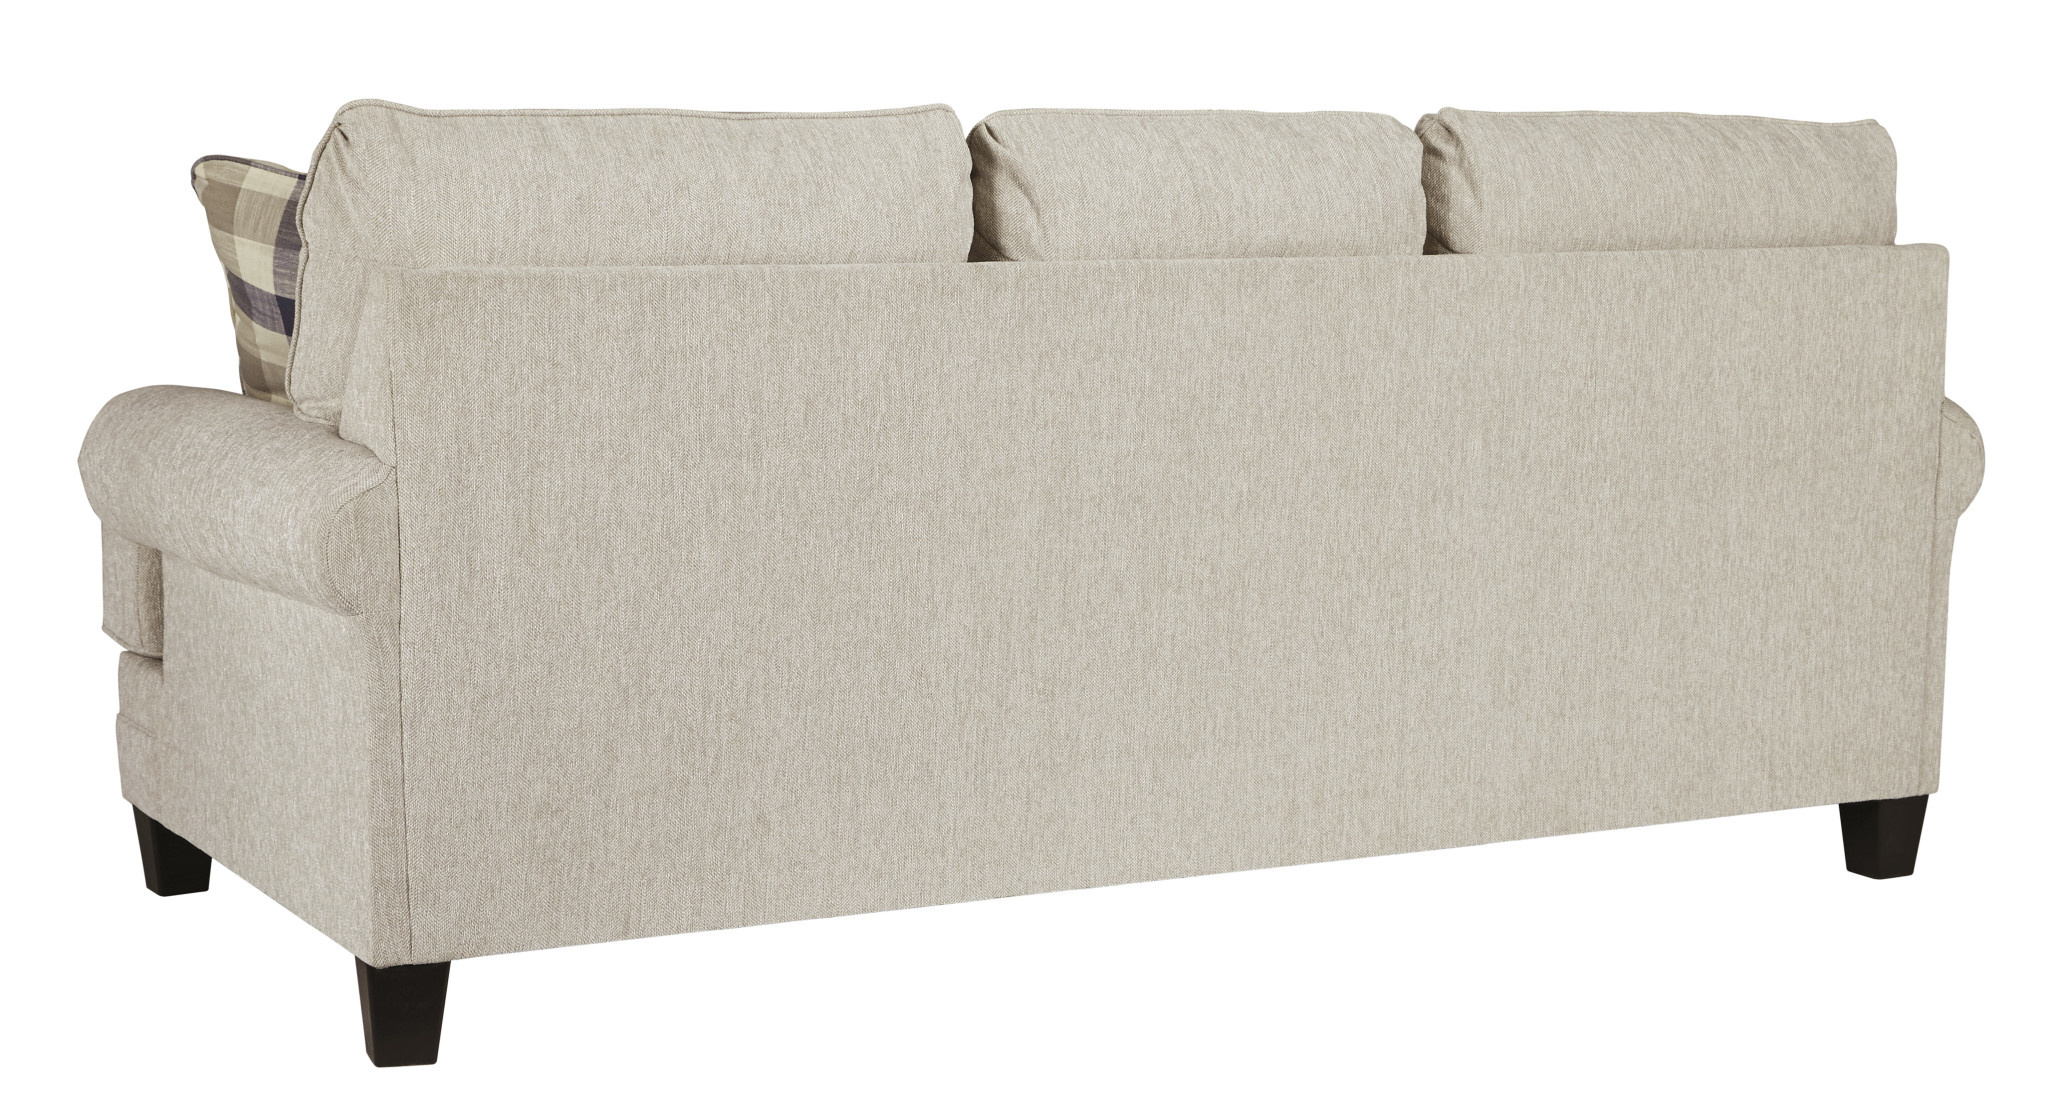 Benchcraft "Megget" Sofa- "Linen" Color 1950438